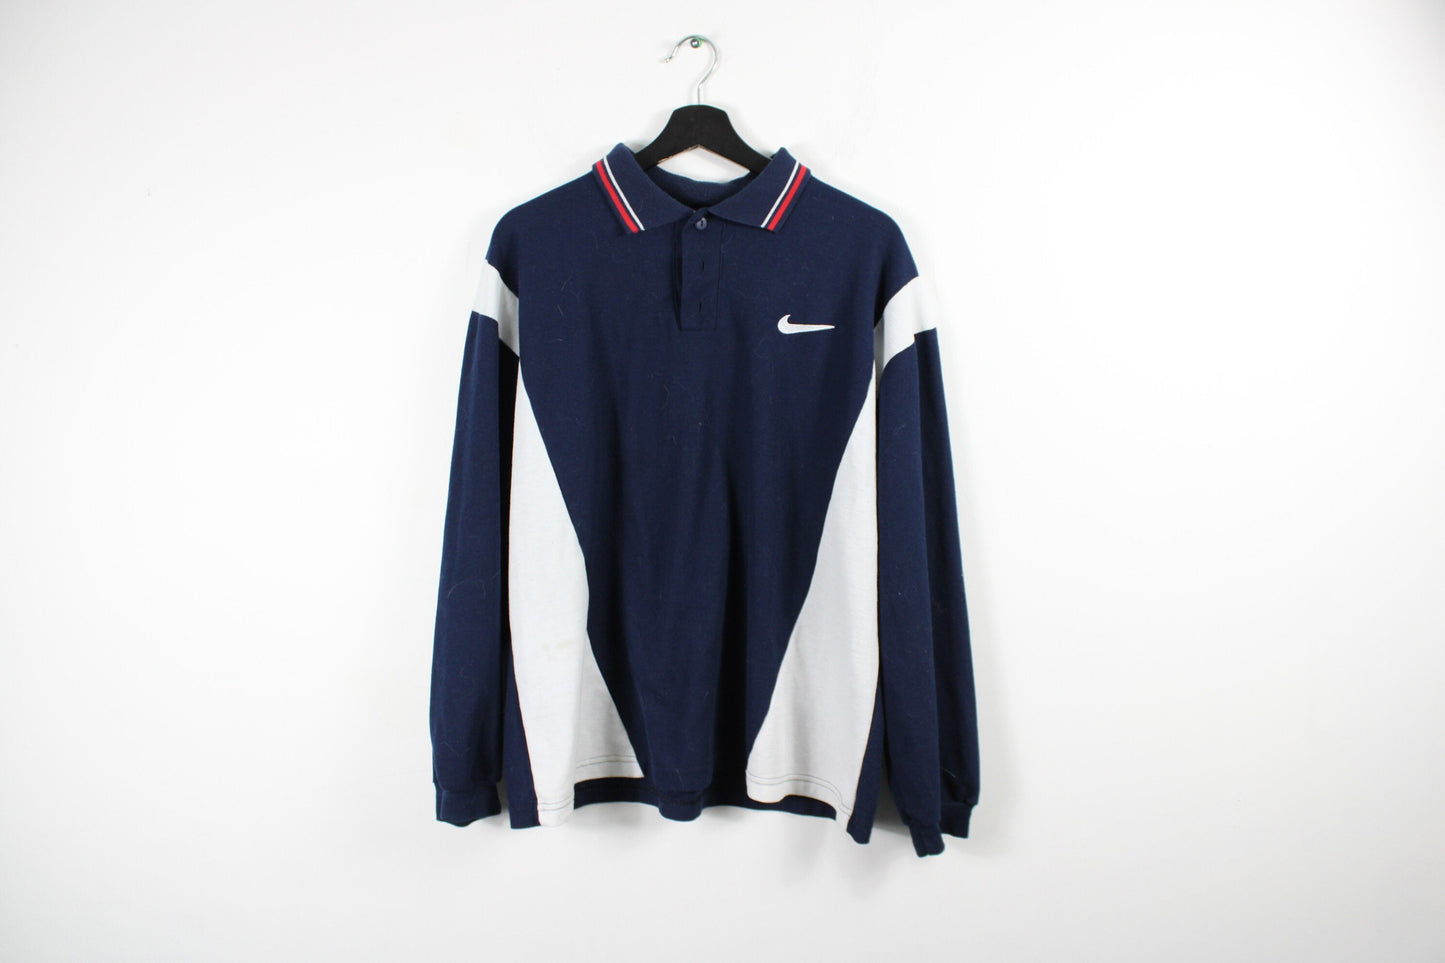 Nike-Swoosh Polo-Rugby Shirt / Vintage Graphic Logo Tee Shirt / 90s Hip Hop Clothing / Streetwear